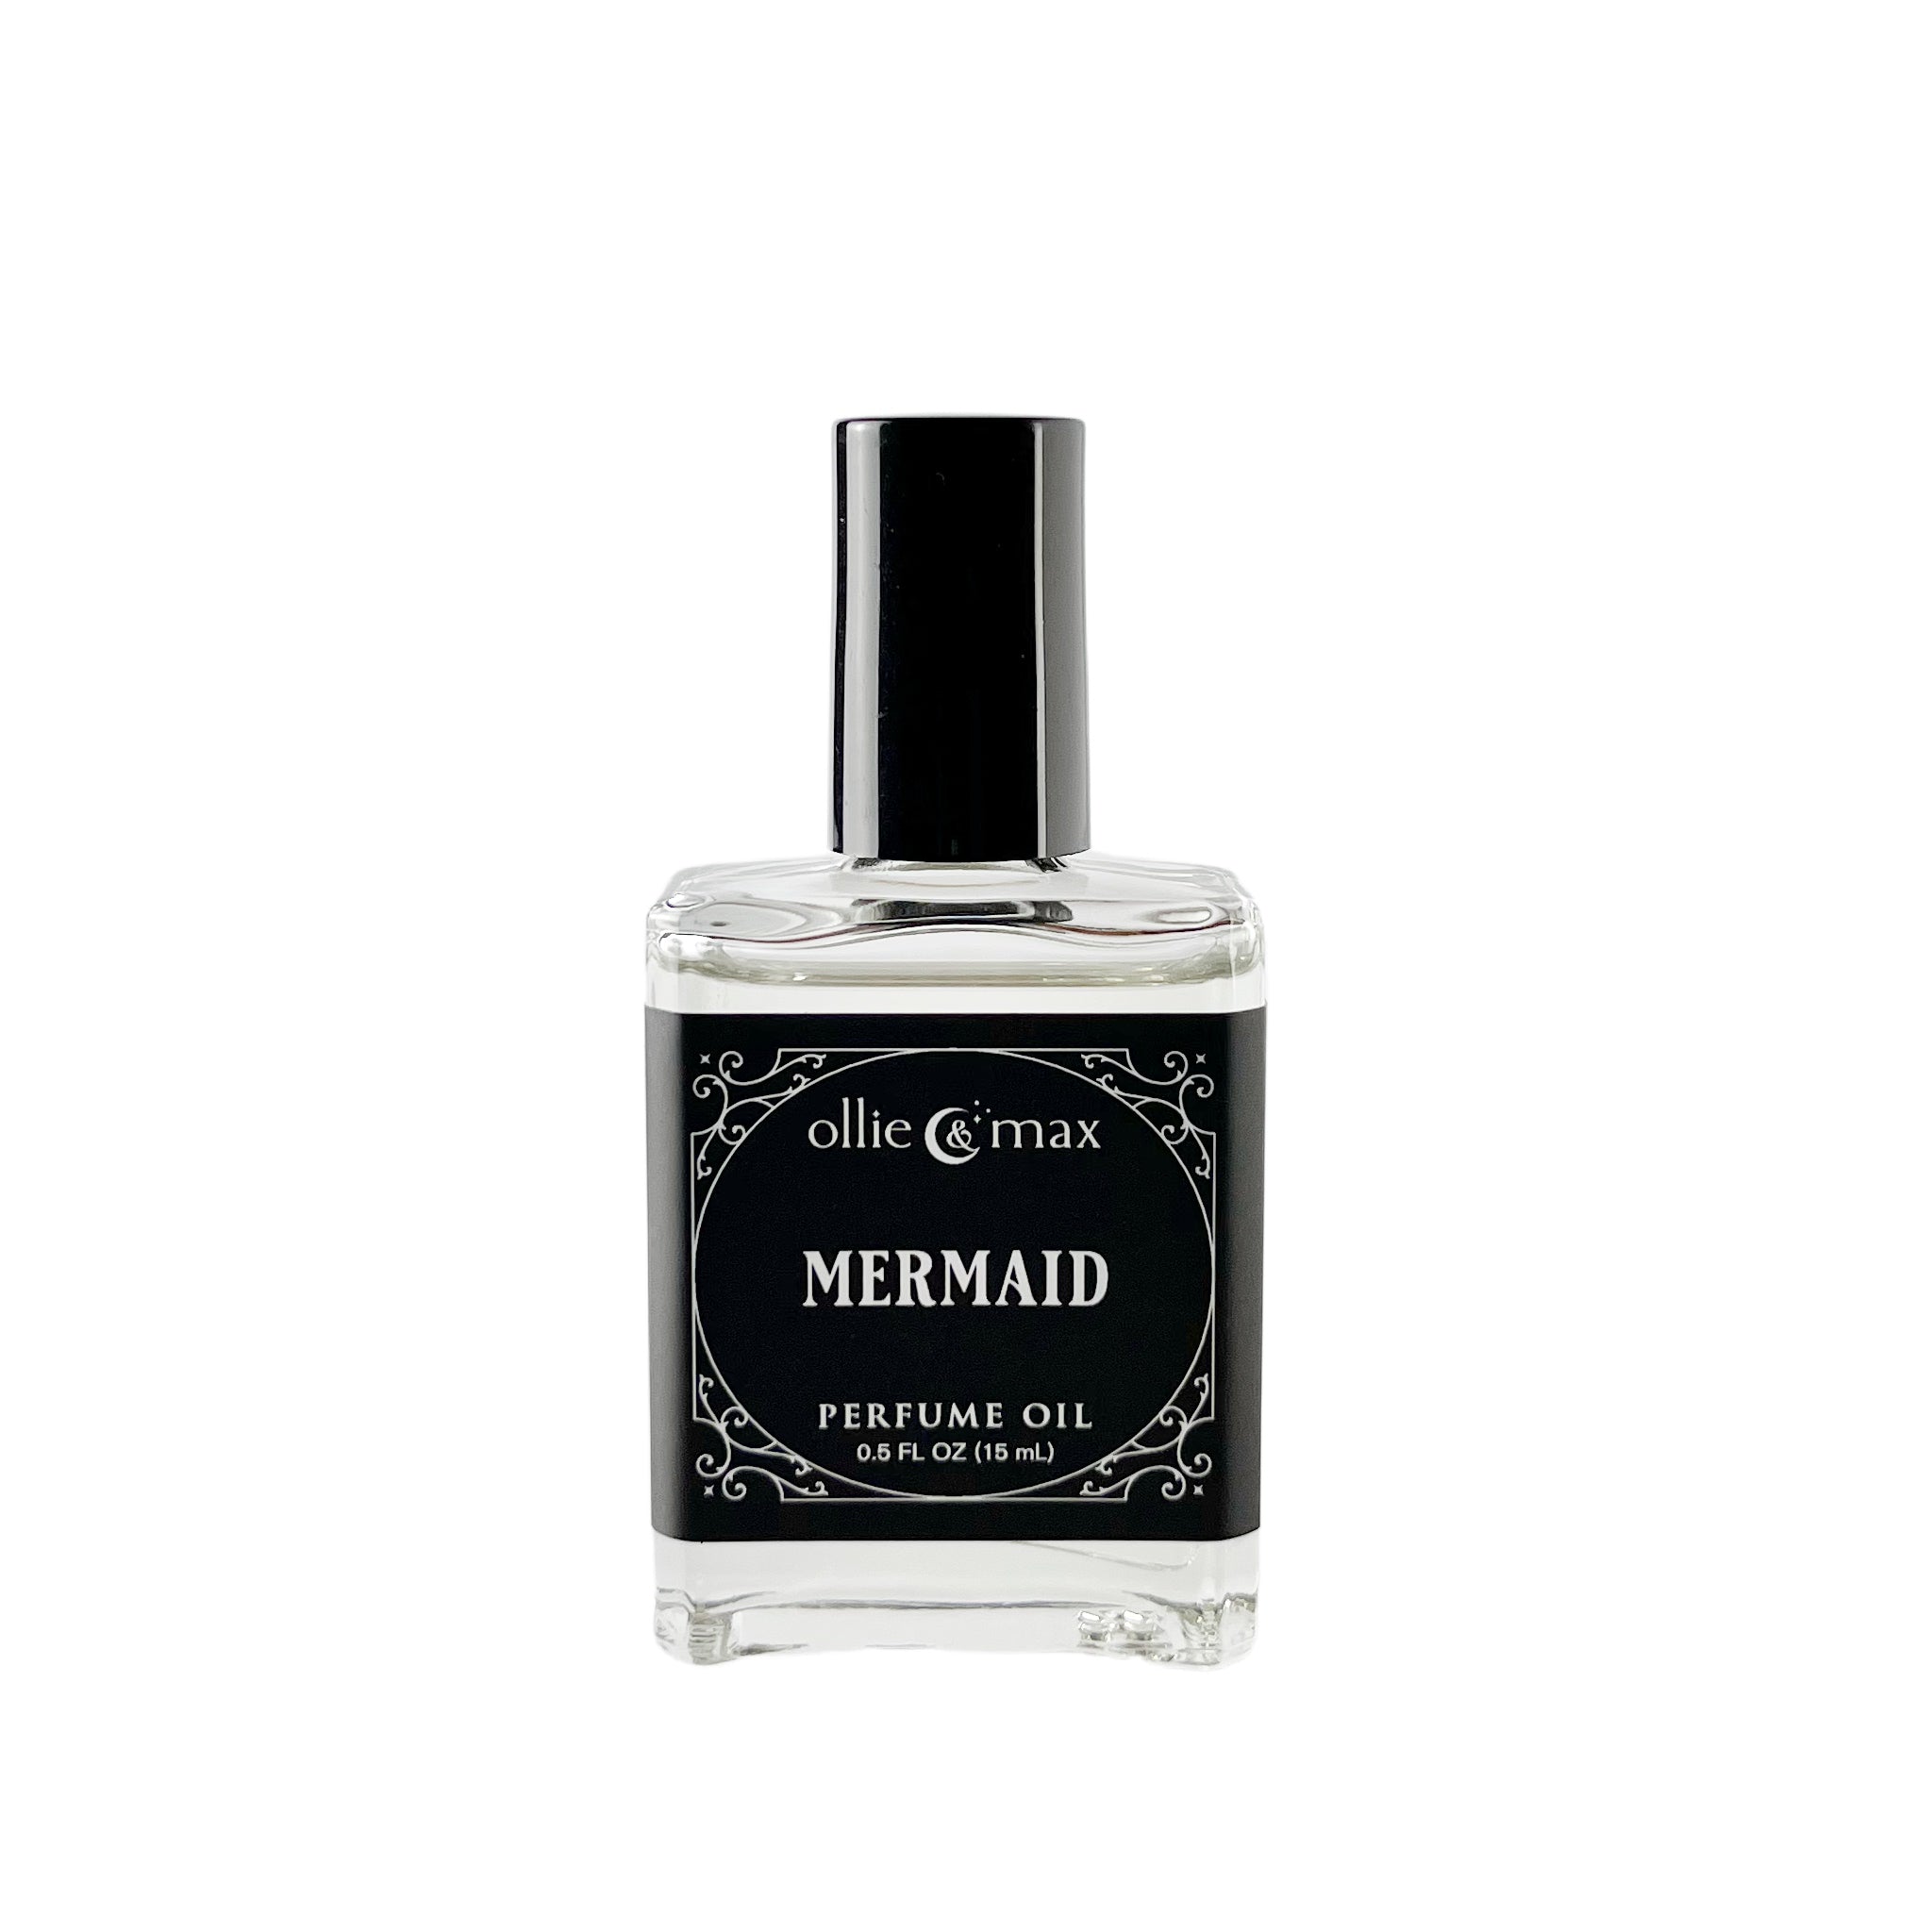 Rectangle glass perfume bottle with black cap and label, Mermaid vegan perfume, 15ml